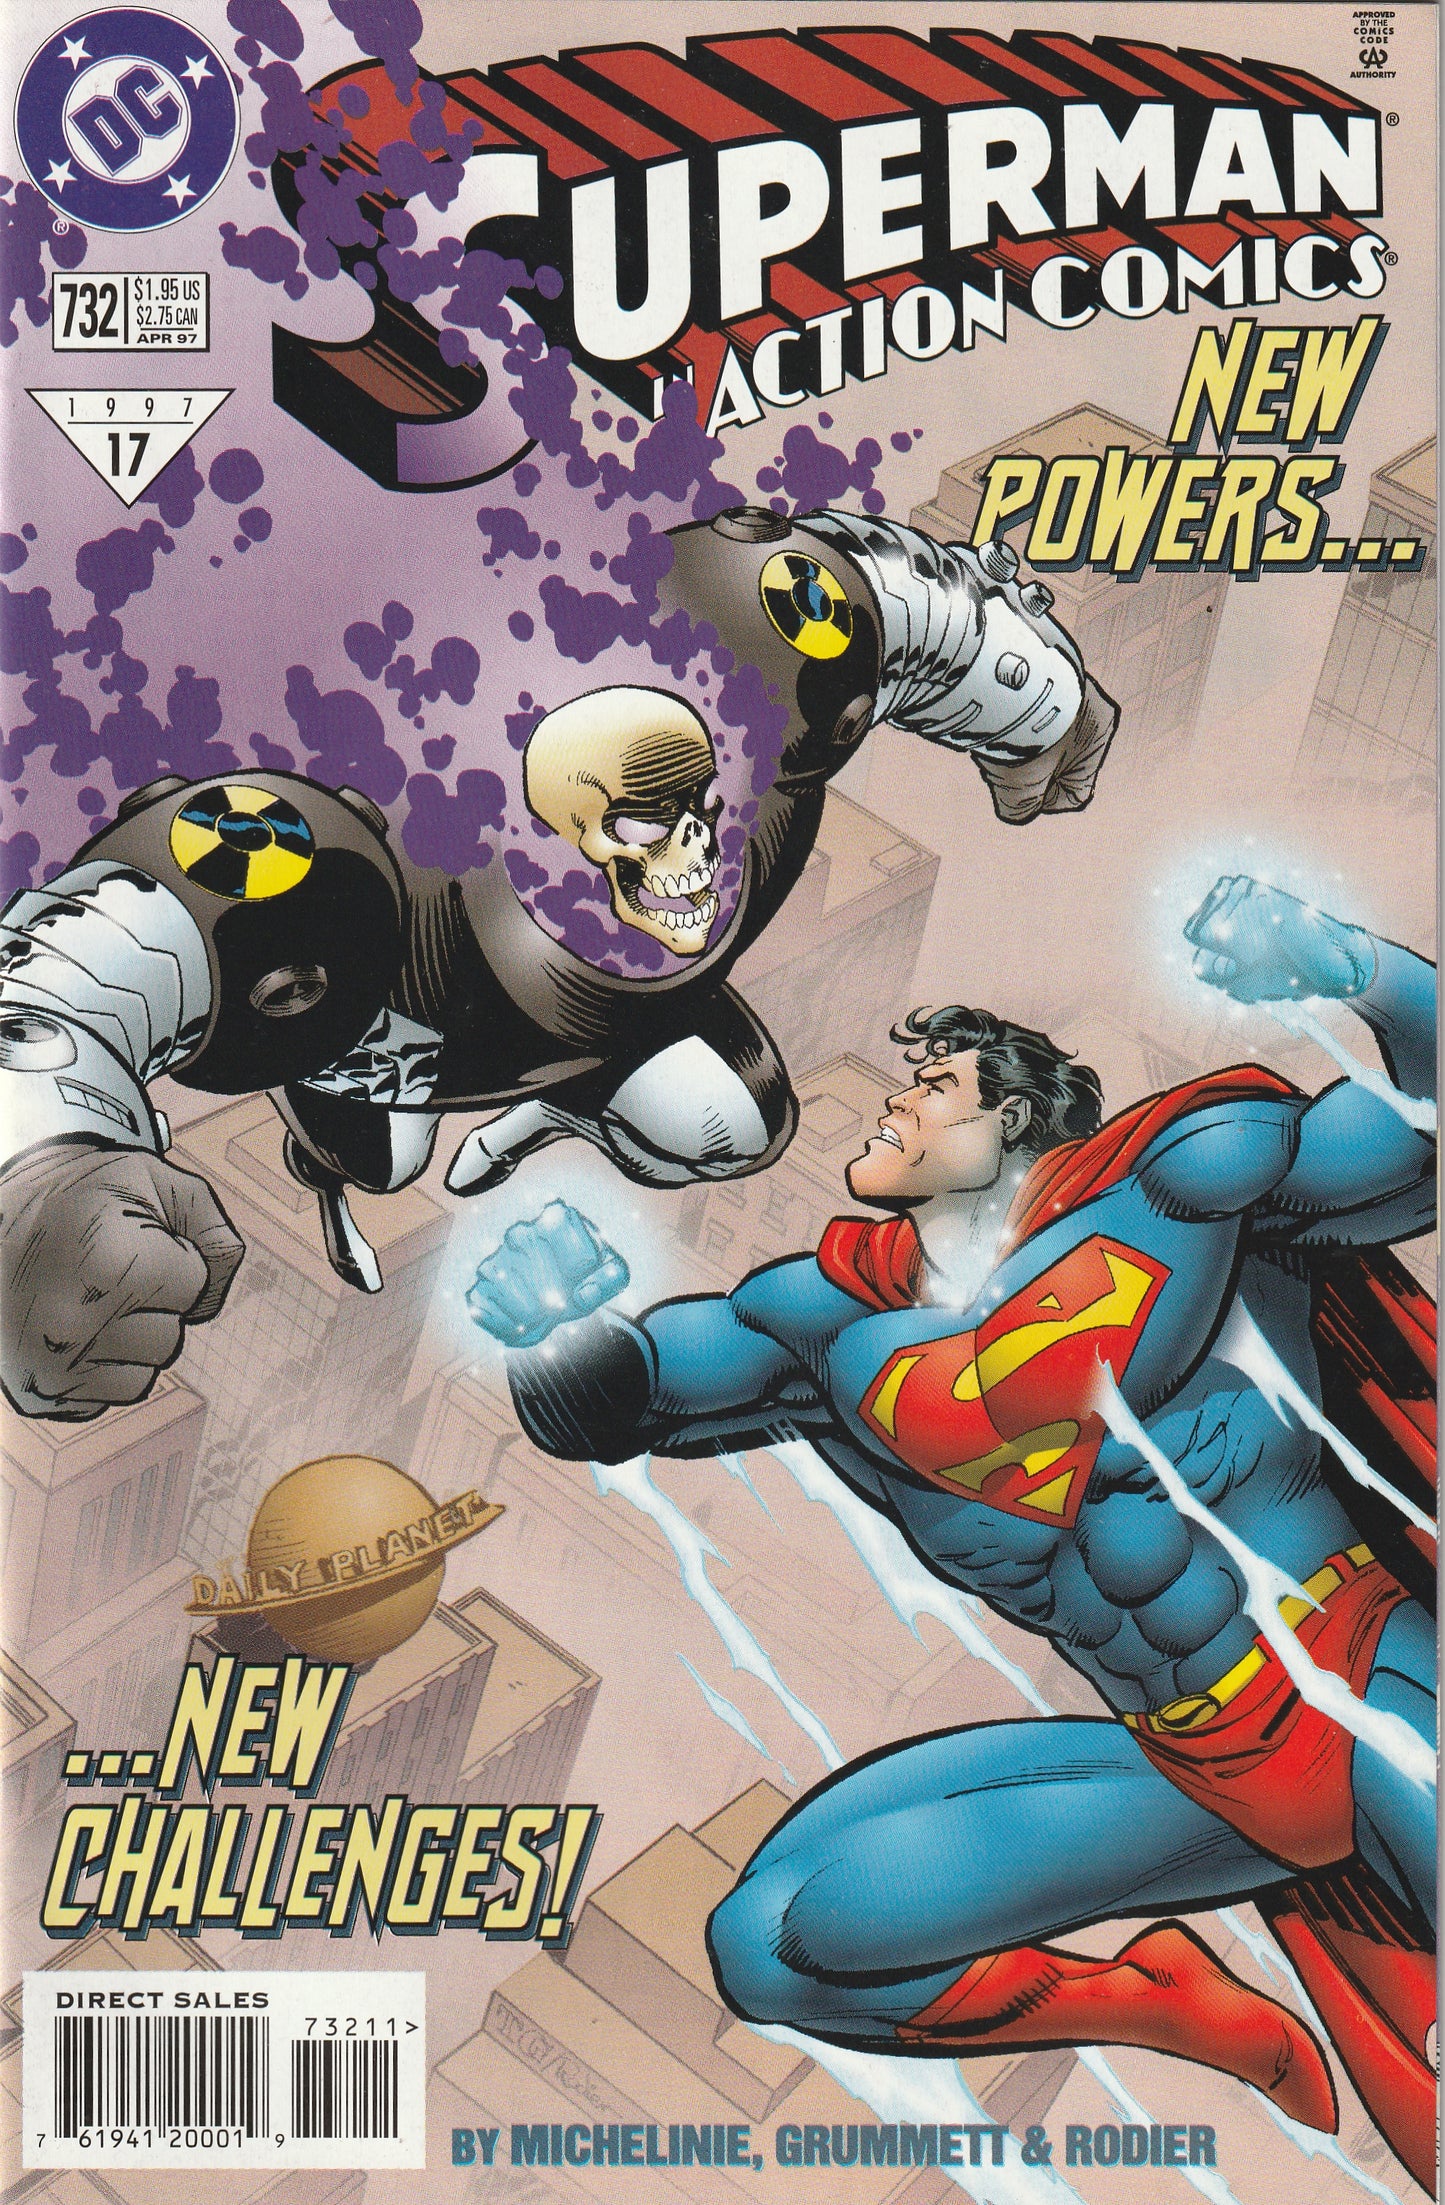 Action Comics #732 (1997)